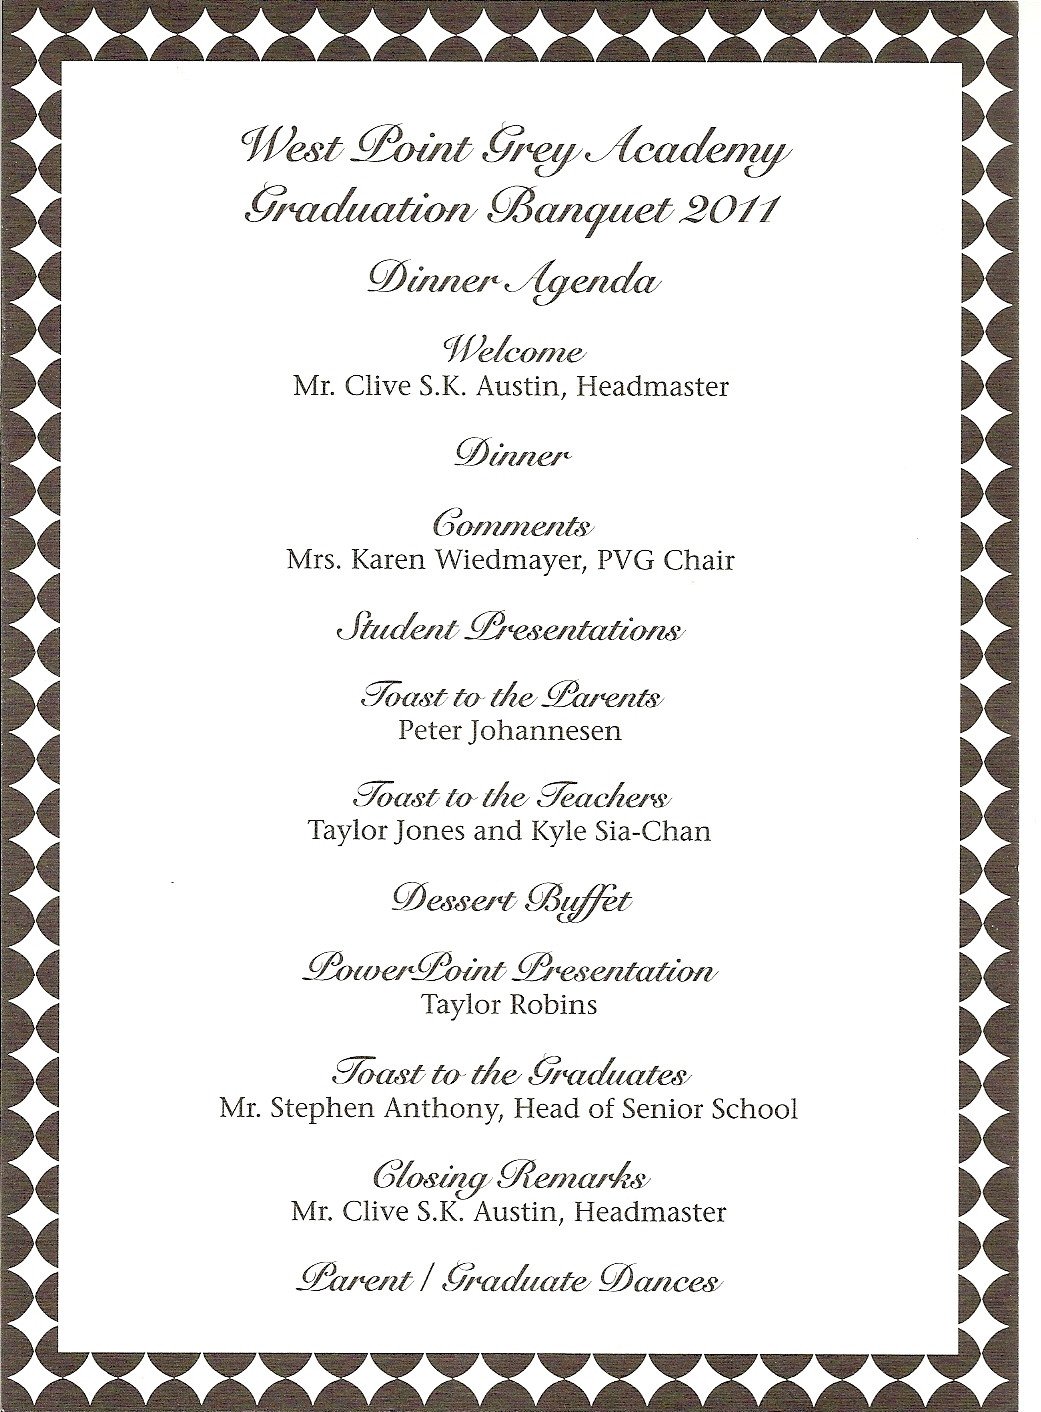 Donna s Report WPGA Graduation Banquet Teddy